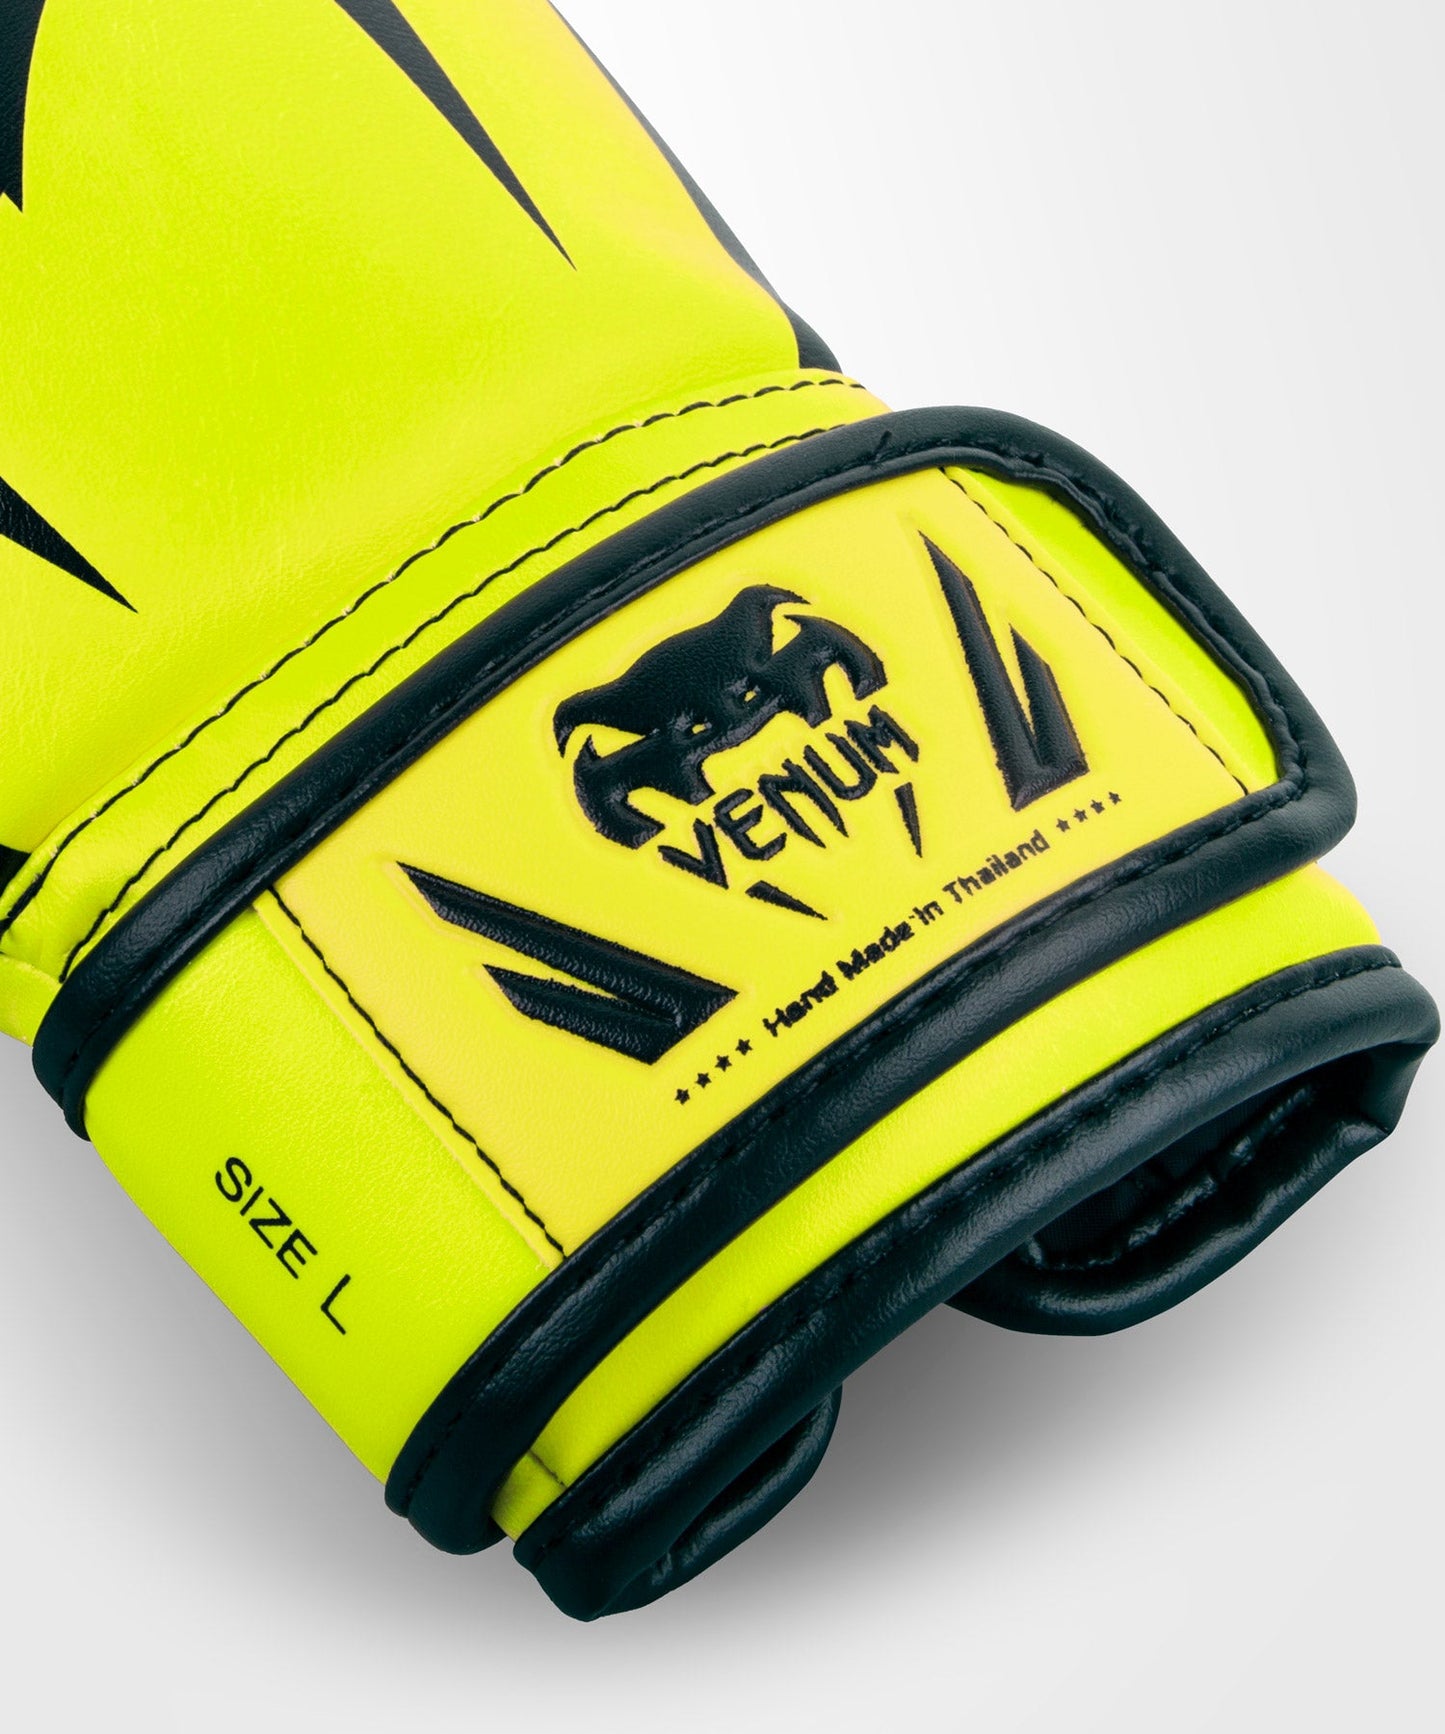 Venum Elite Boxing Gloves Kids - Exclusive - Fluo yellow